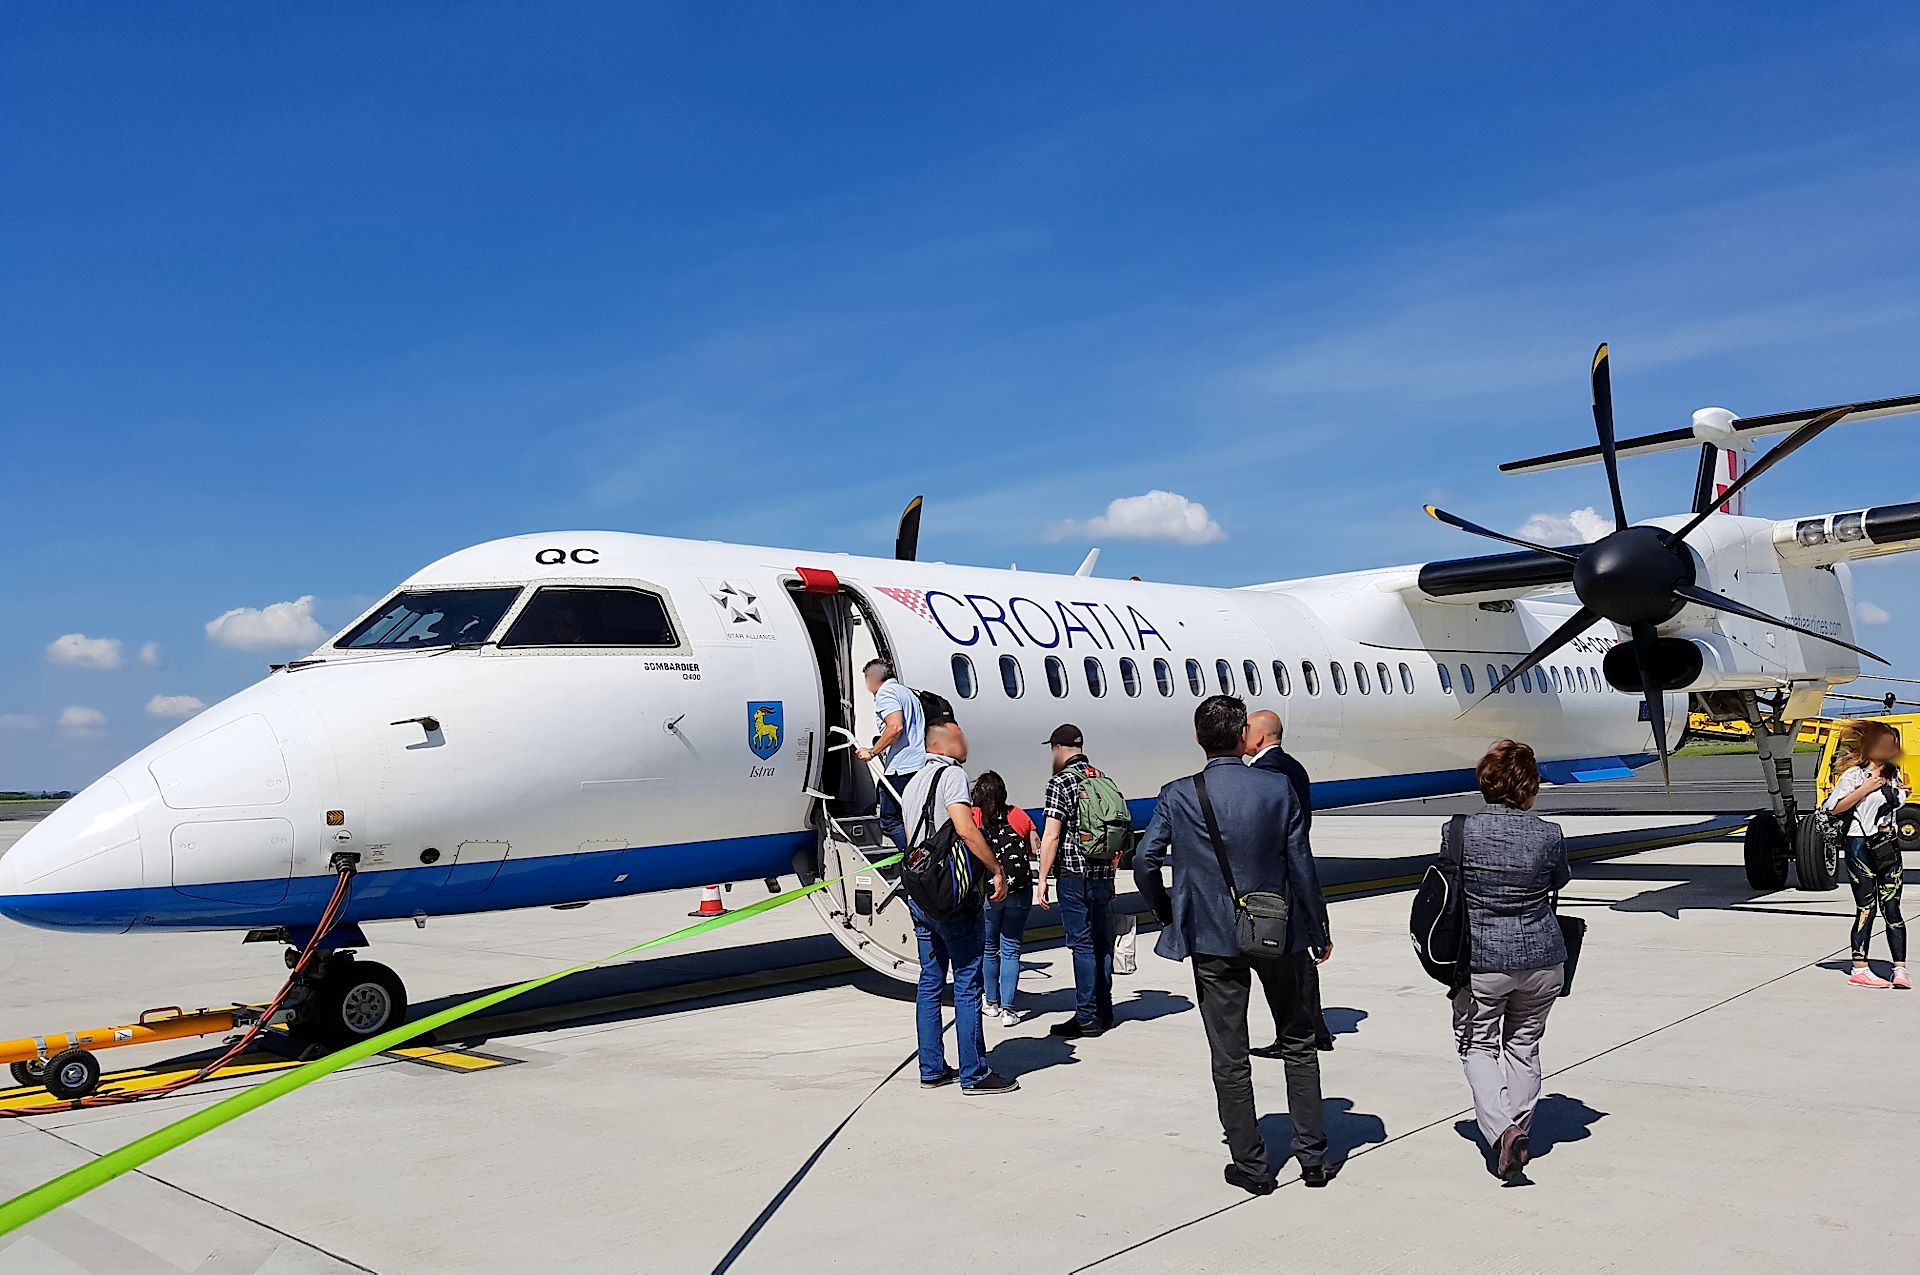 Dash Q8-400 Zagreb-Dubrovnik